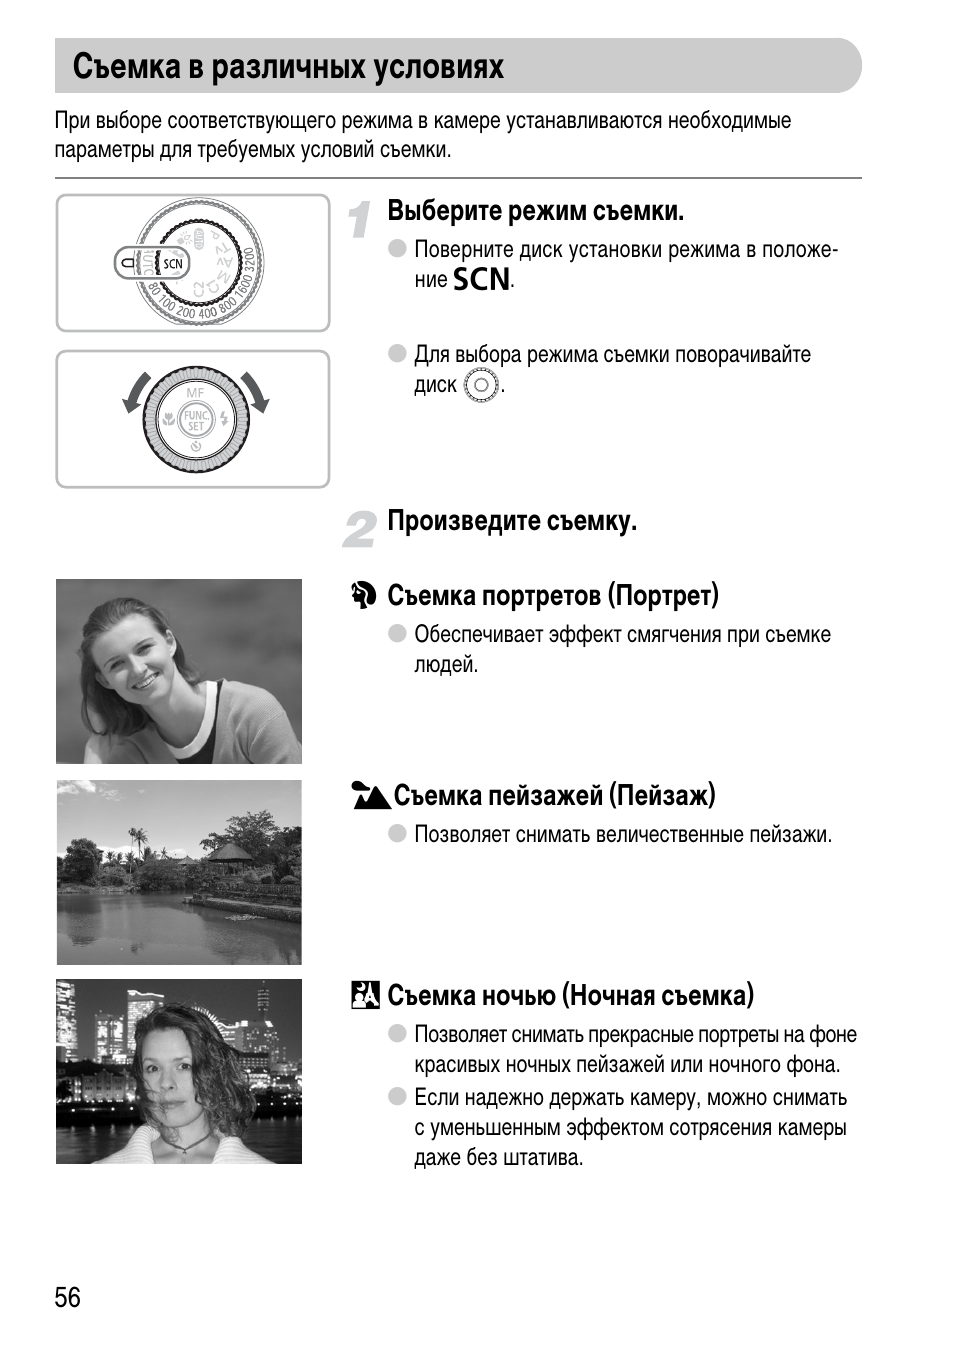 Съемка в различных условиях | Инструкция по эксплуатации Canon PowerShot G11 | Страница 56 / 193